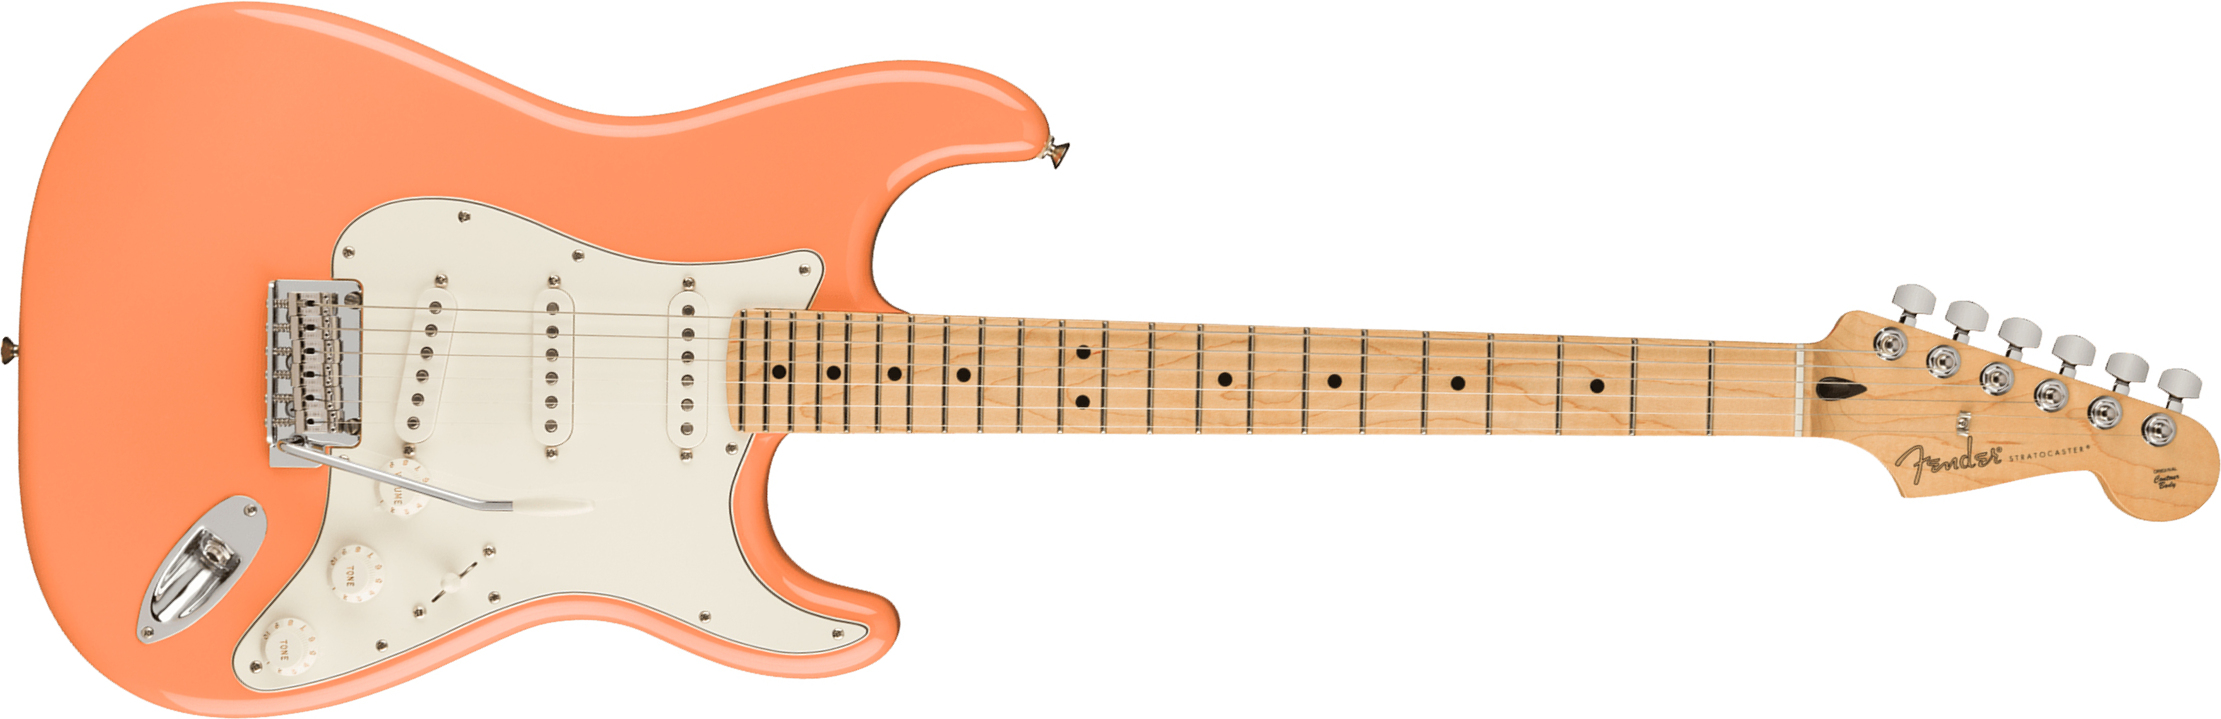 Fender Strat Player Ltd Mex 3s Trem Mn - Pacific Peach - E-Gitarre in Str-Form - Main picture